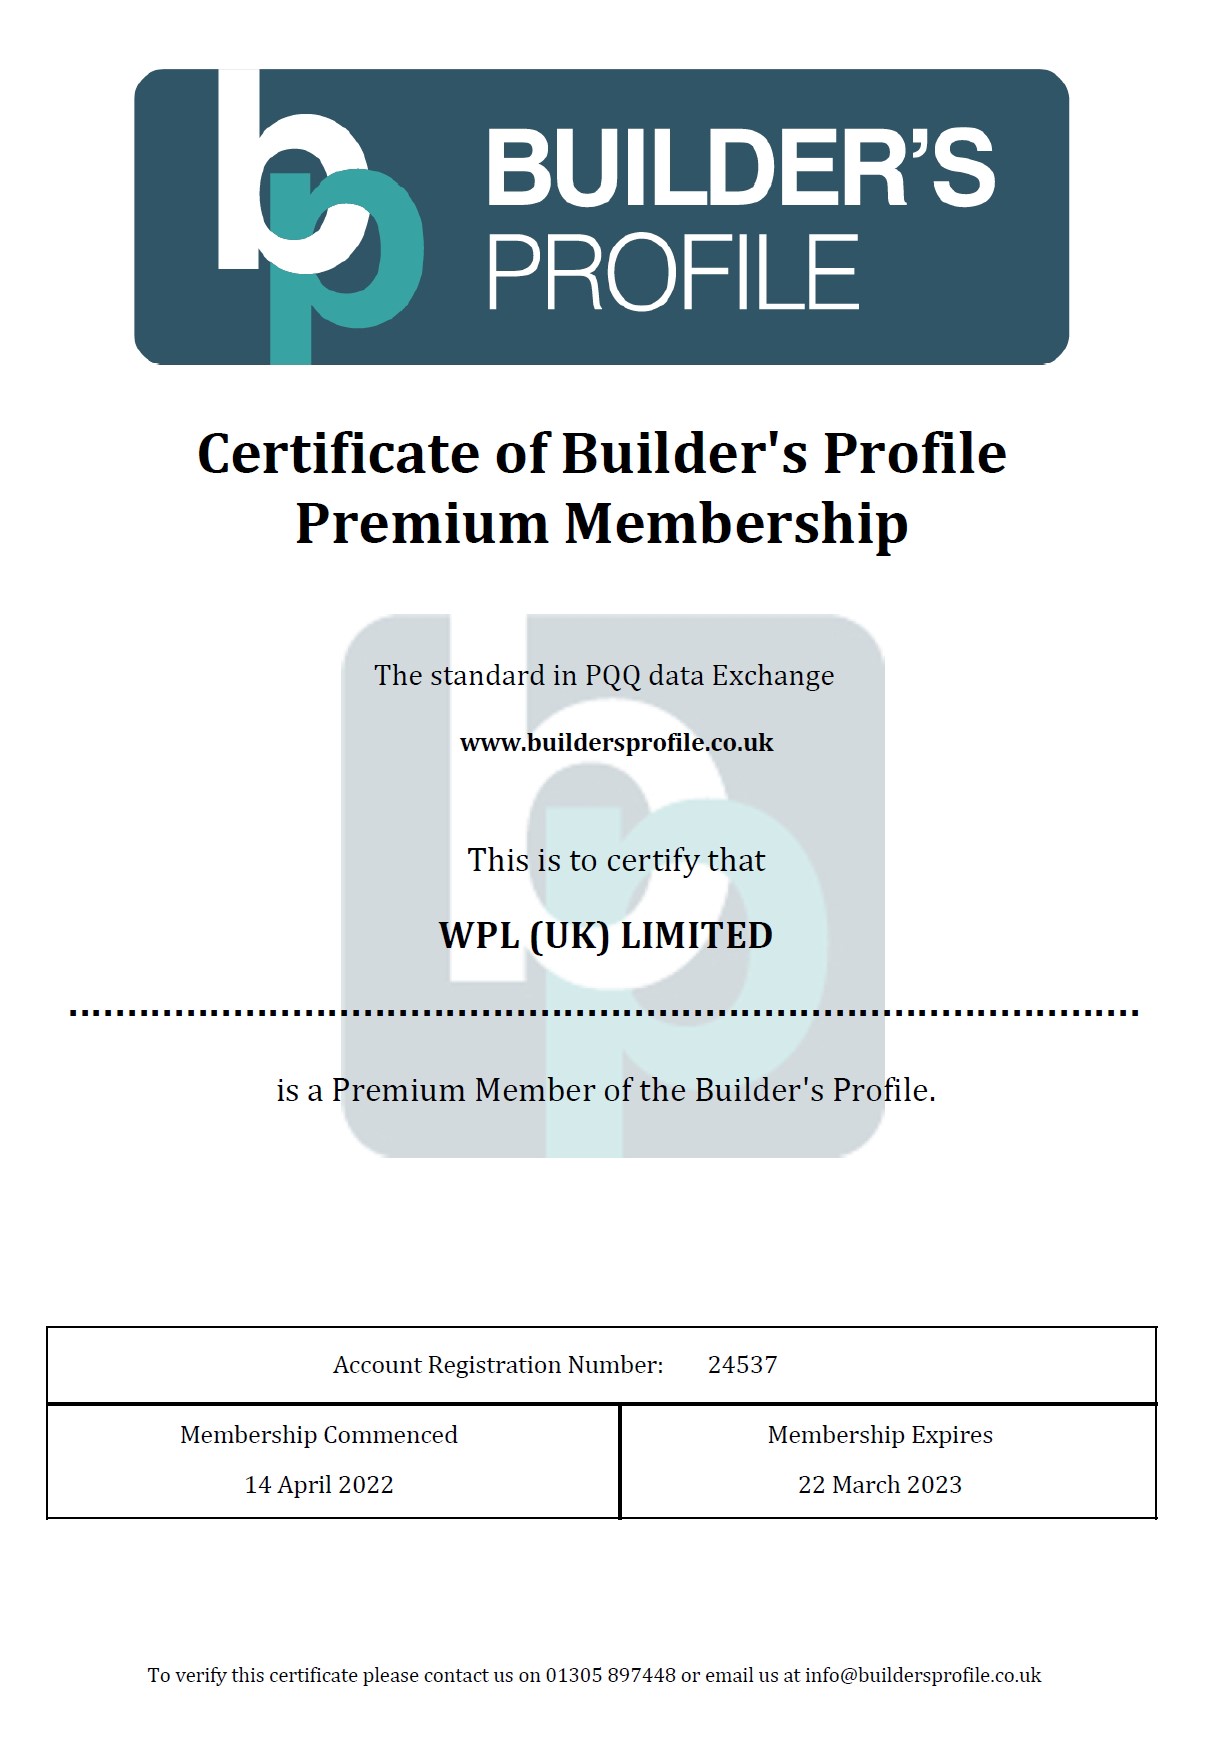 WPLUK Builder's Profile Premium Membership Certificate to 22nd March 2023